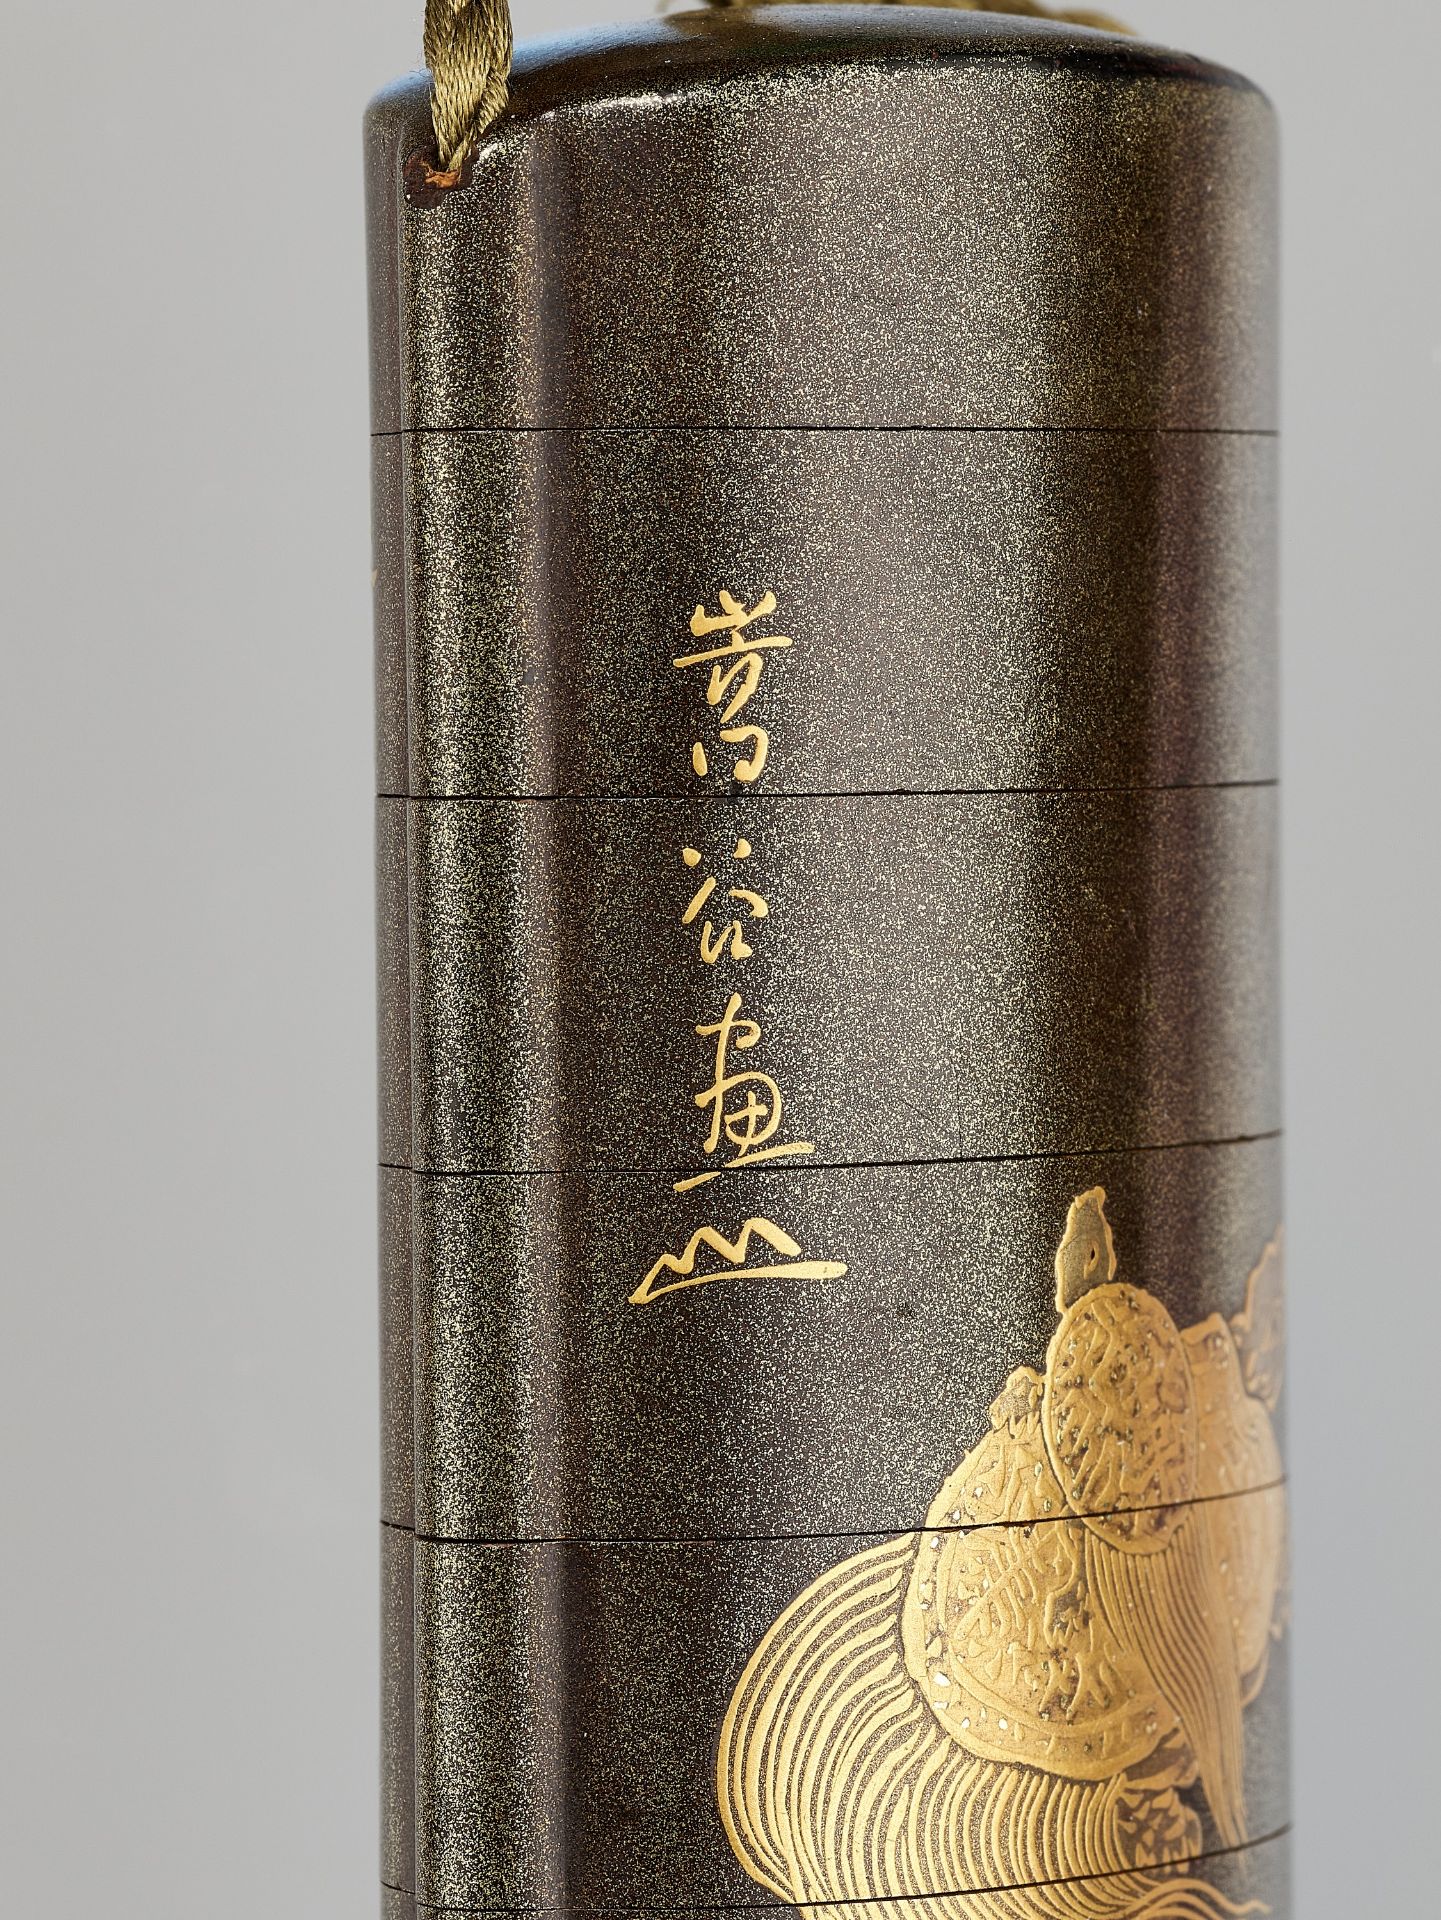 SORYUSAI: A FINE GOLD LACQUER FIVE-CASE INRO DEPICTING JUROJIN AND MINOGAME, WITH EN SUITE NETSUKE - Bild 6 aus 10